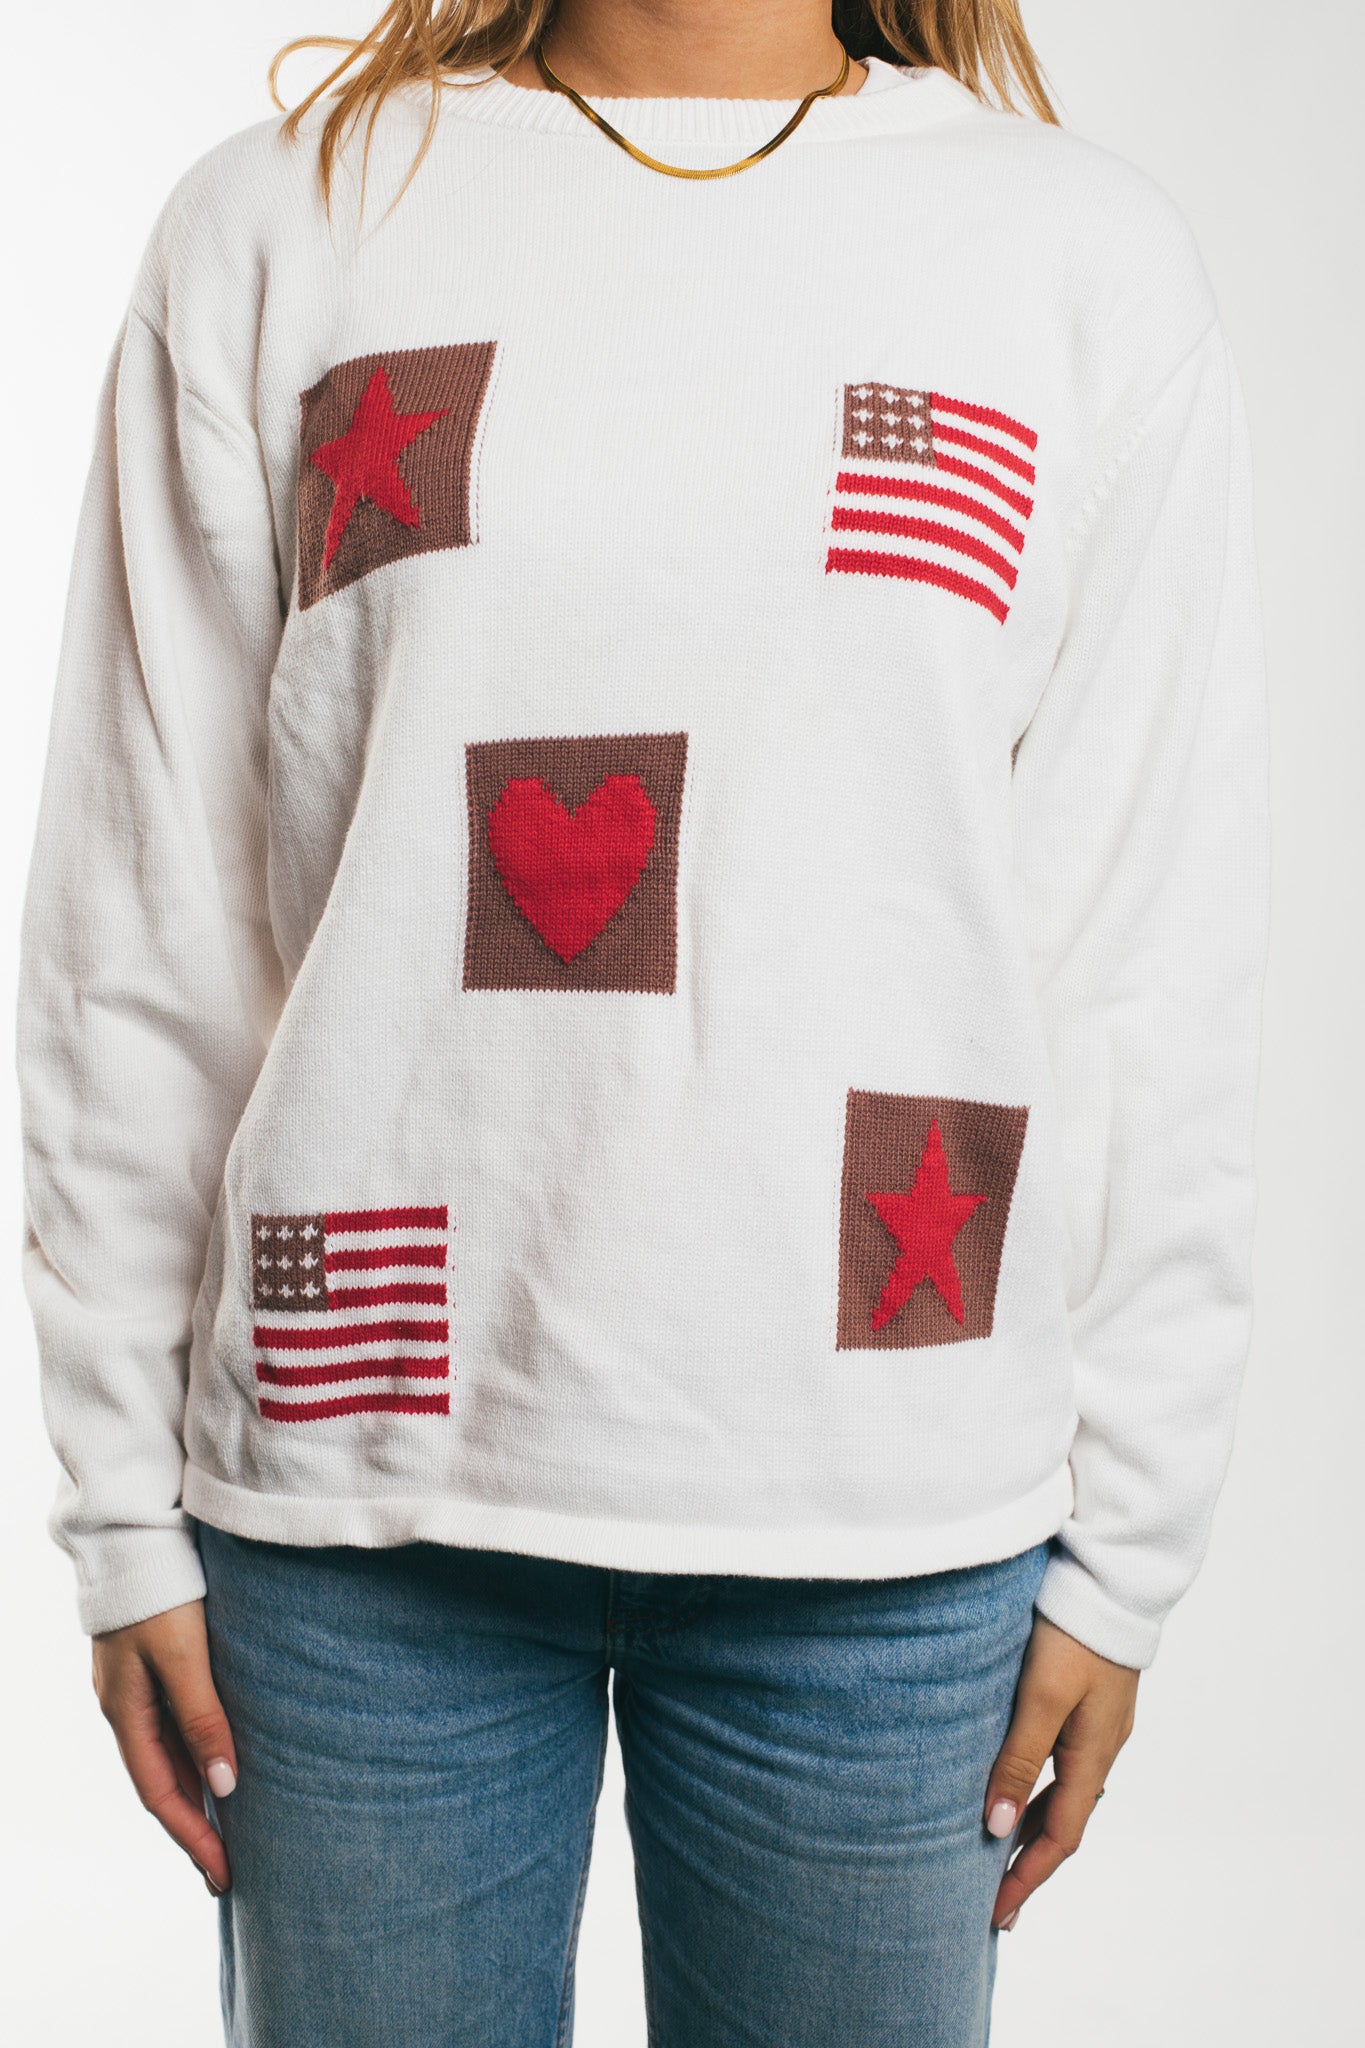 USA Flag - Sweatshirt (S)